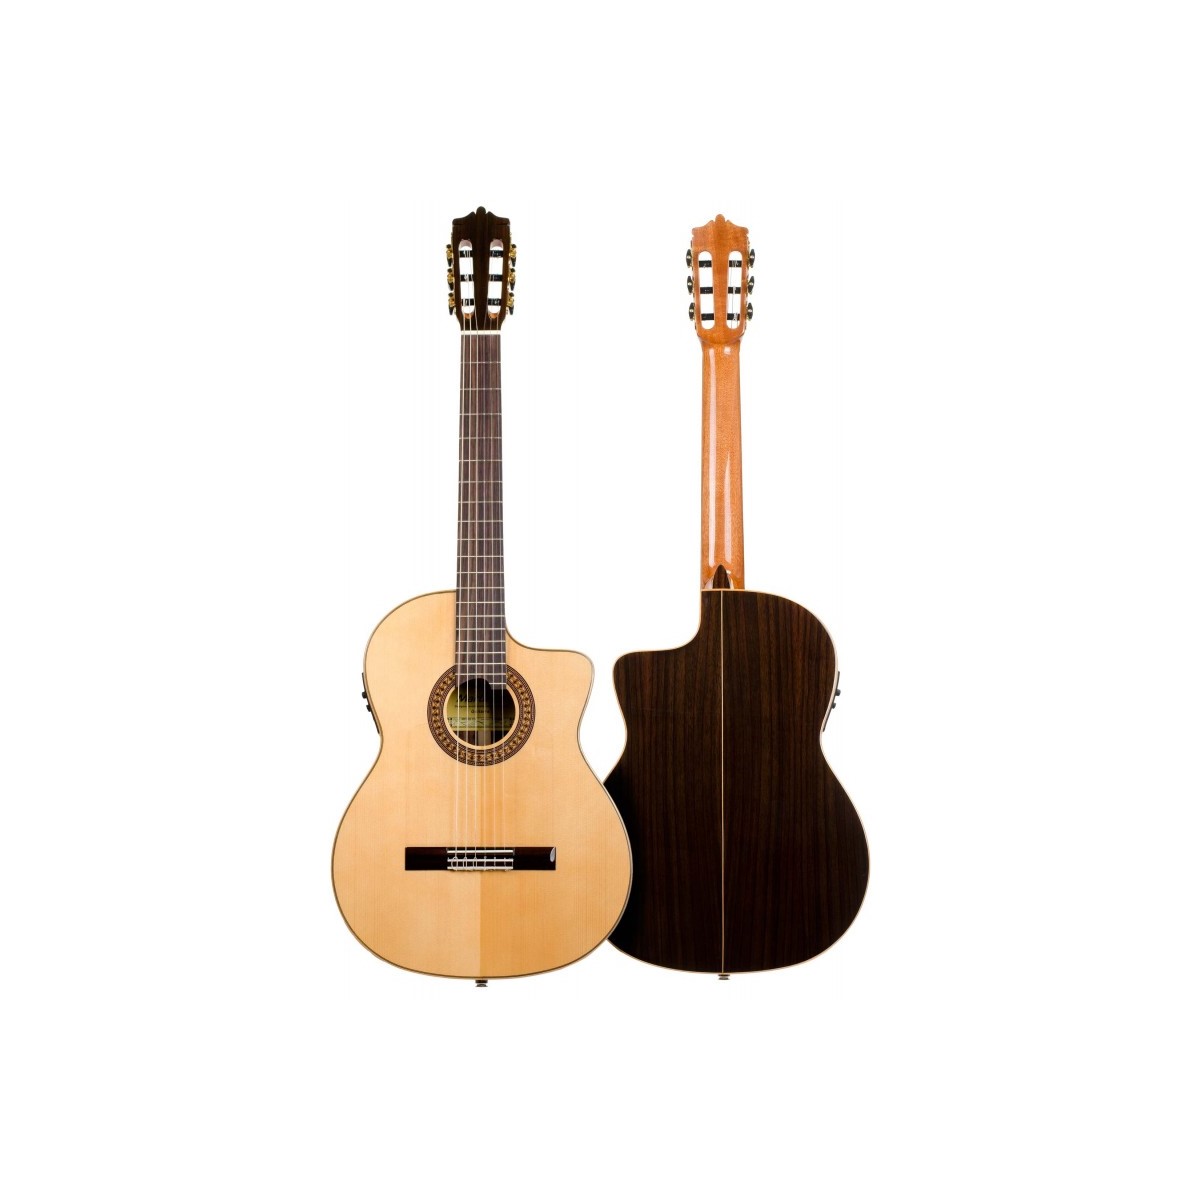 Comprar Guitarra Flamenca Martinez al mejor precio Prieto Msica